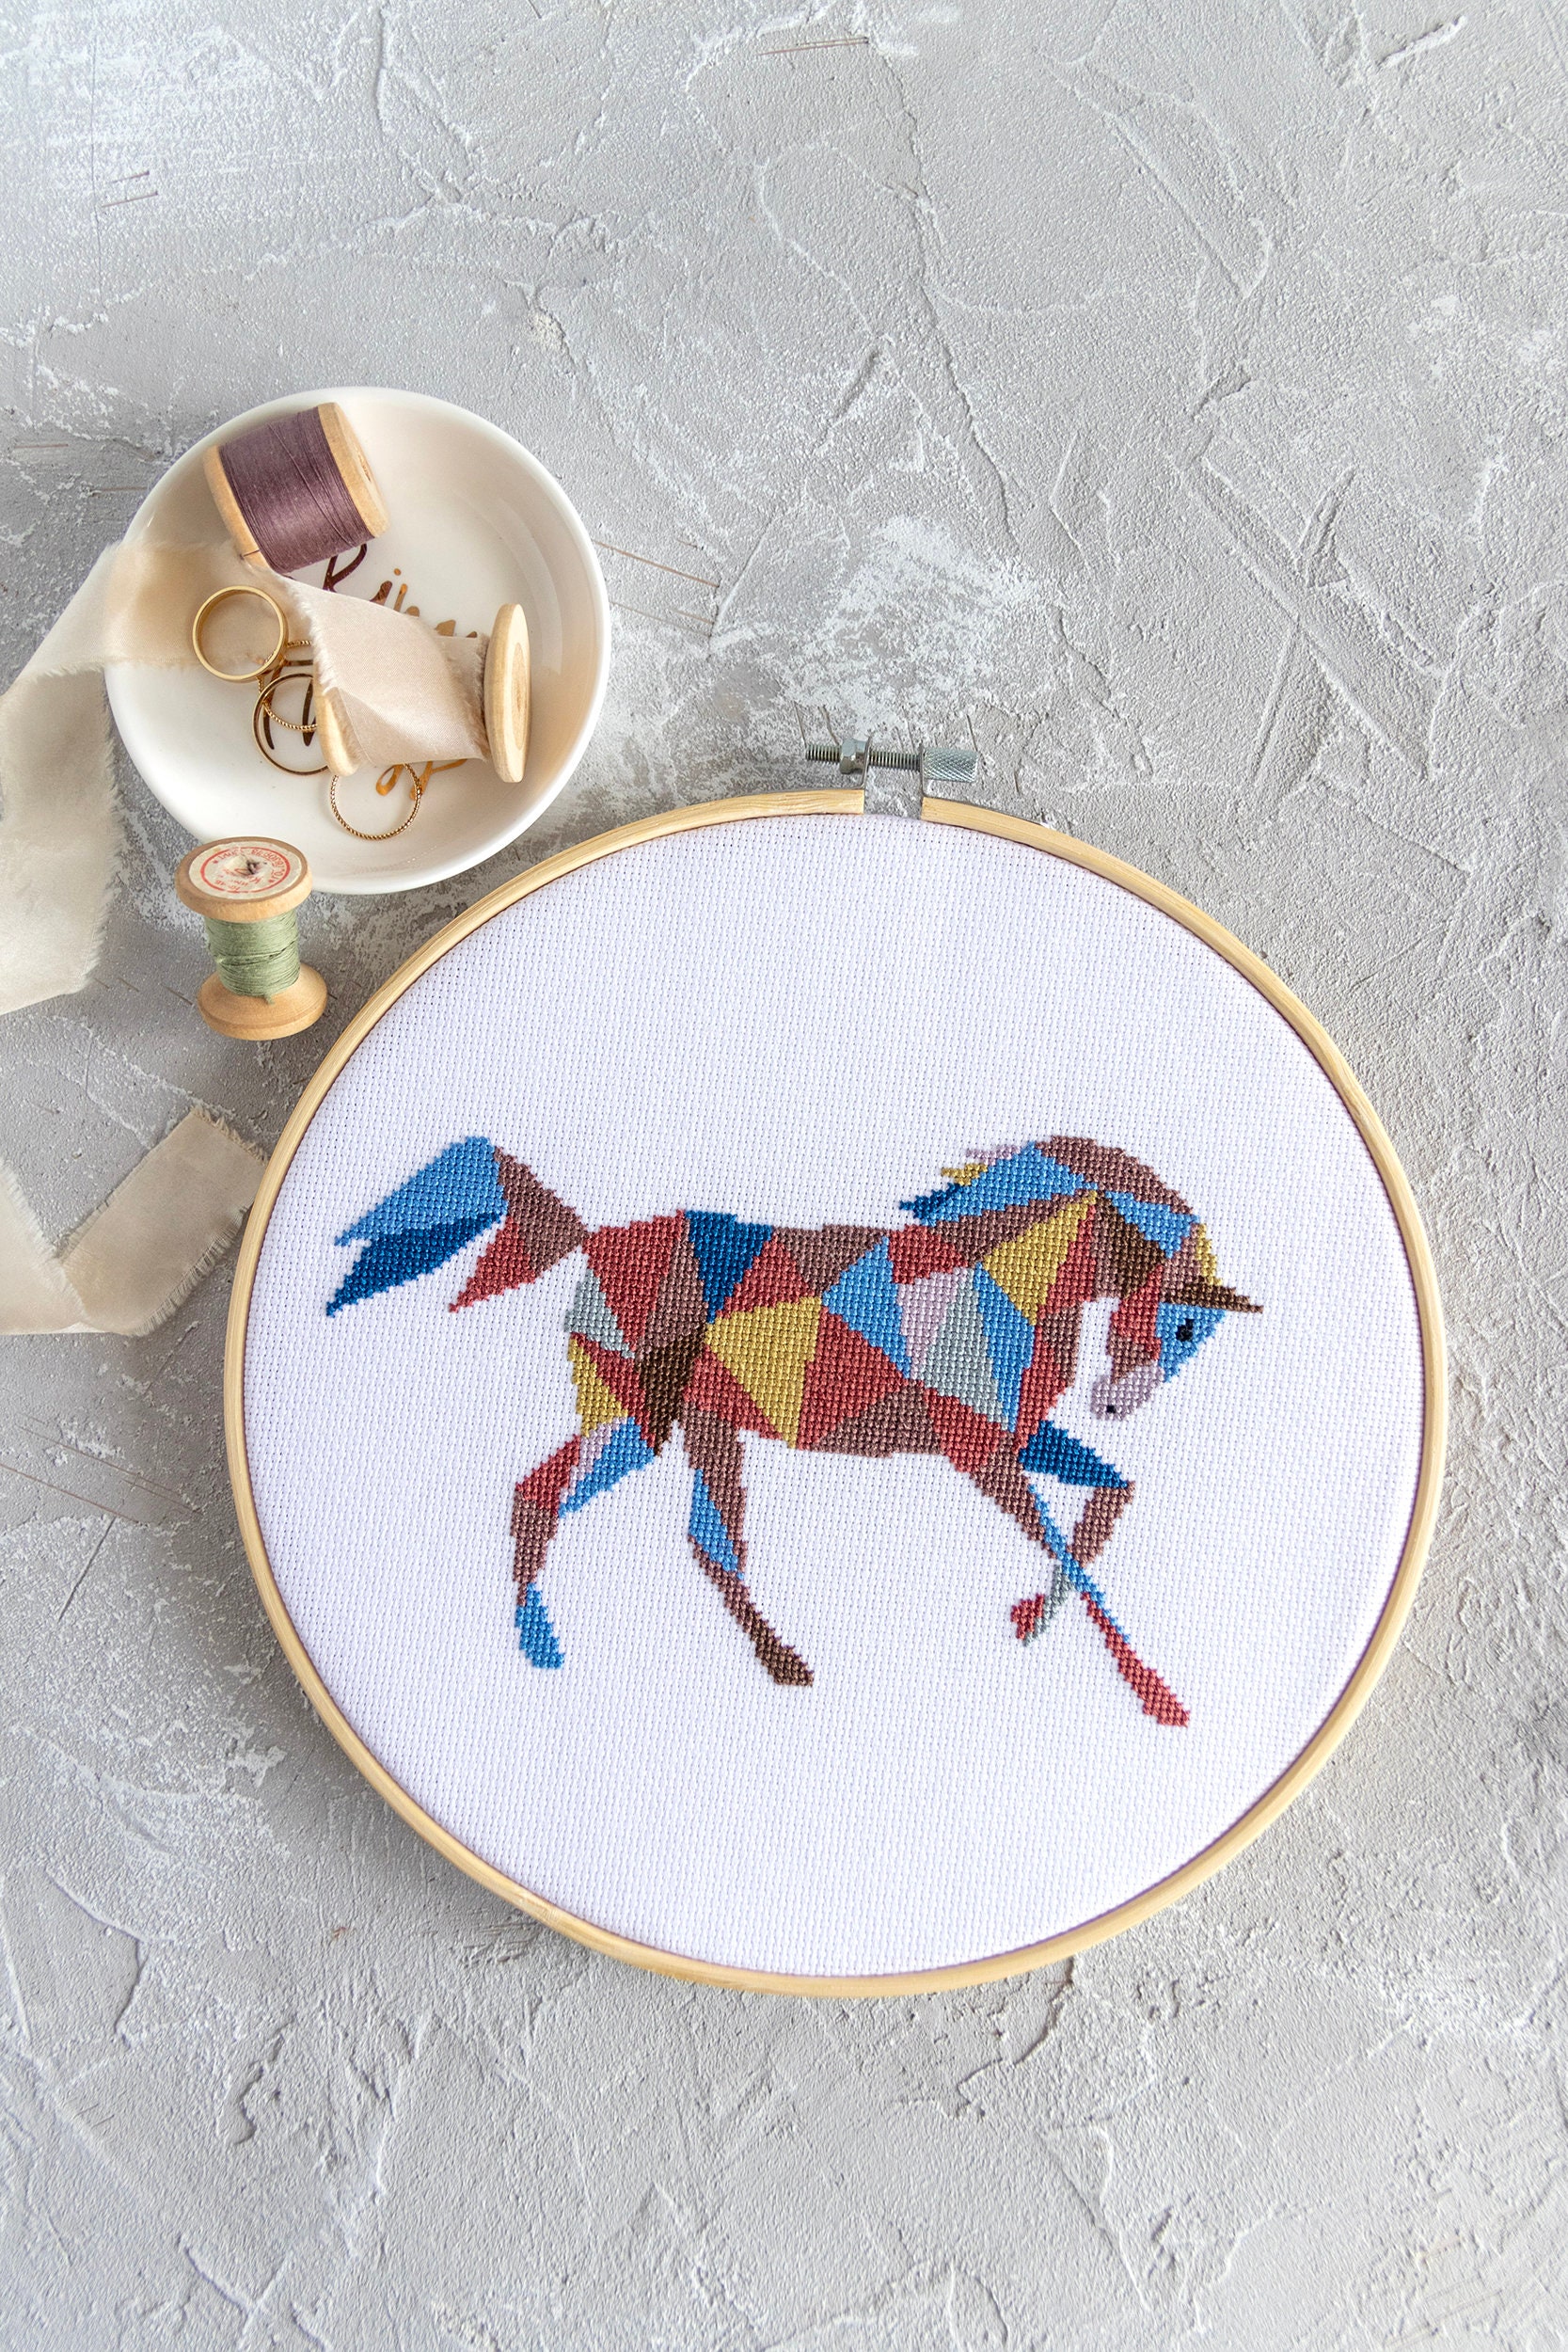 Beginner Cross Stitch Kits Elephant and Owl Pattern Aida 16CT 14CT 11CT  Hand Embroidery Set DIY Needle Arts & Craft Hobby Horse